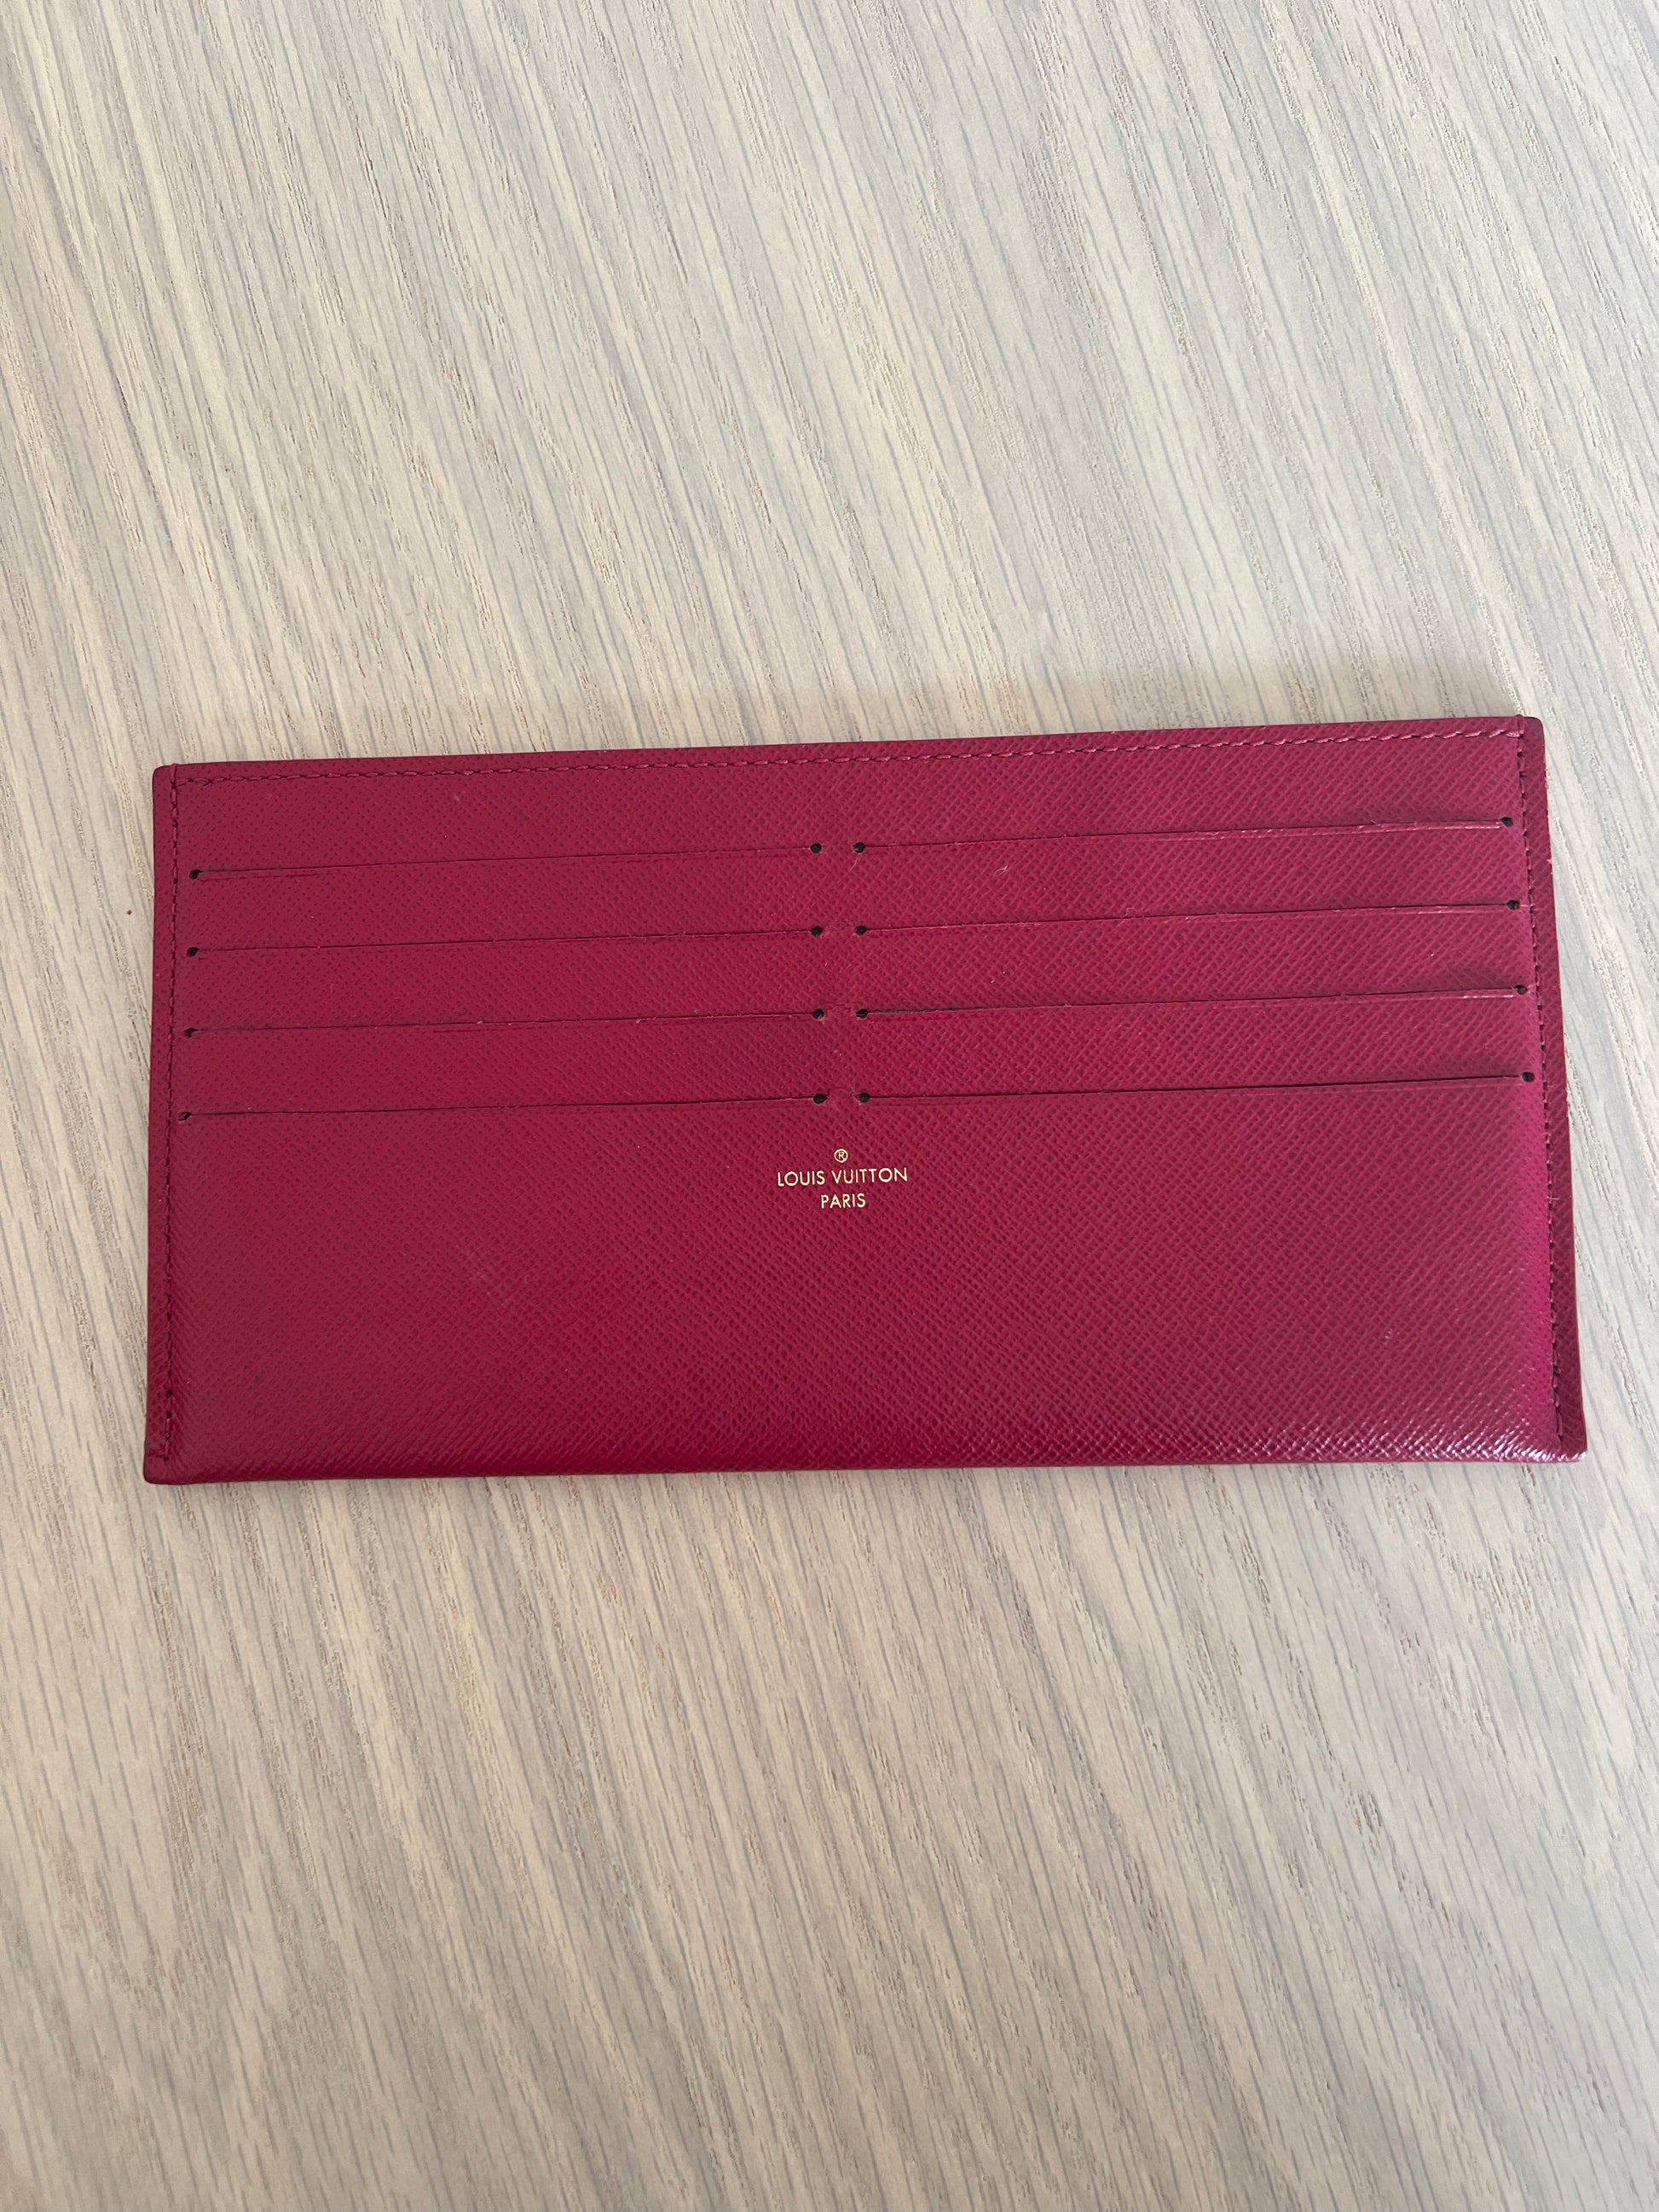 Authentic Louis Vuitton Felicie Pochette Fuchsia Insert Credit Card Holder